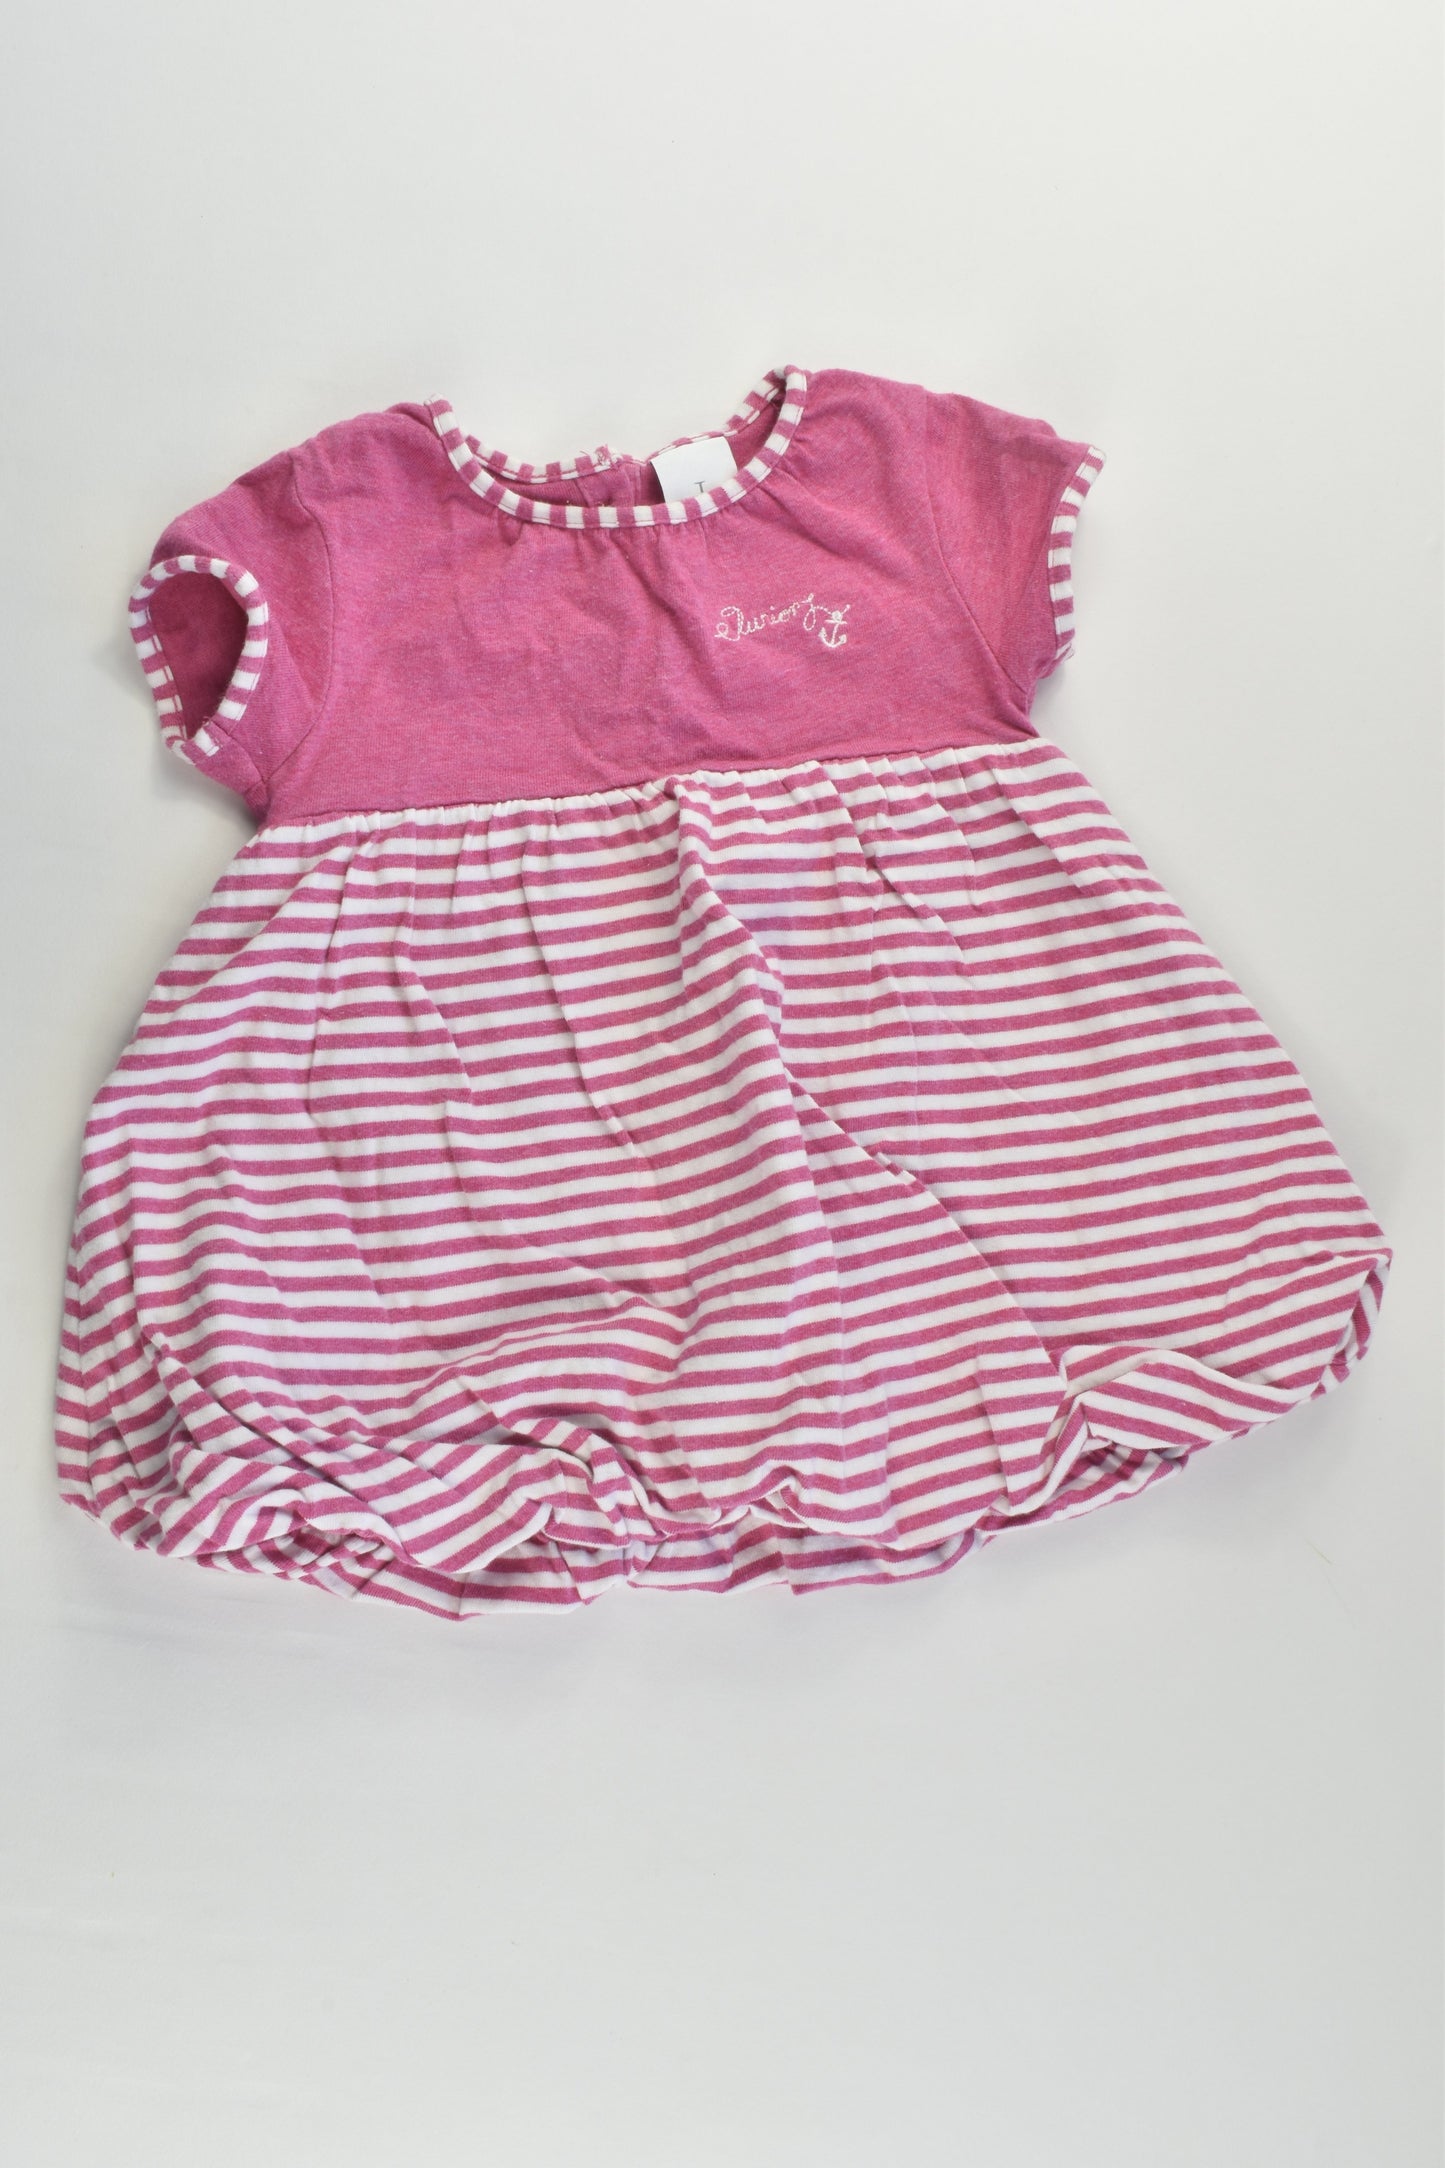 Jasper Conran Junior Size 00 (3-6 months) Dress/Tunic